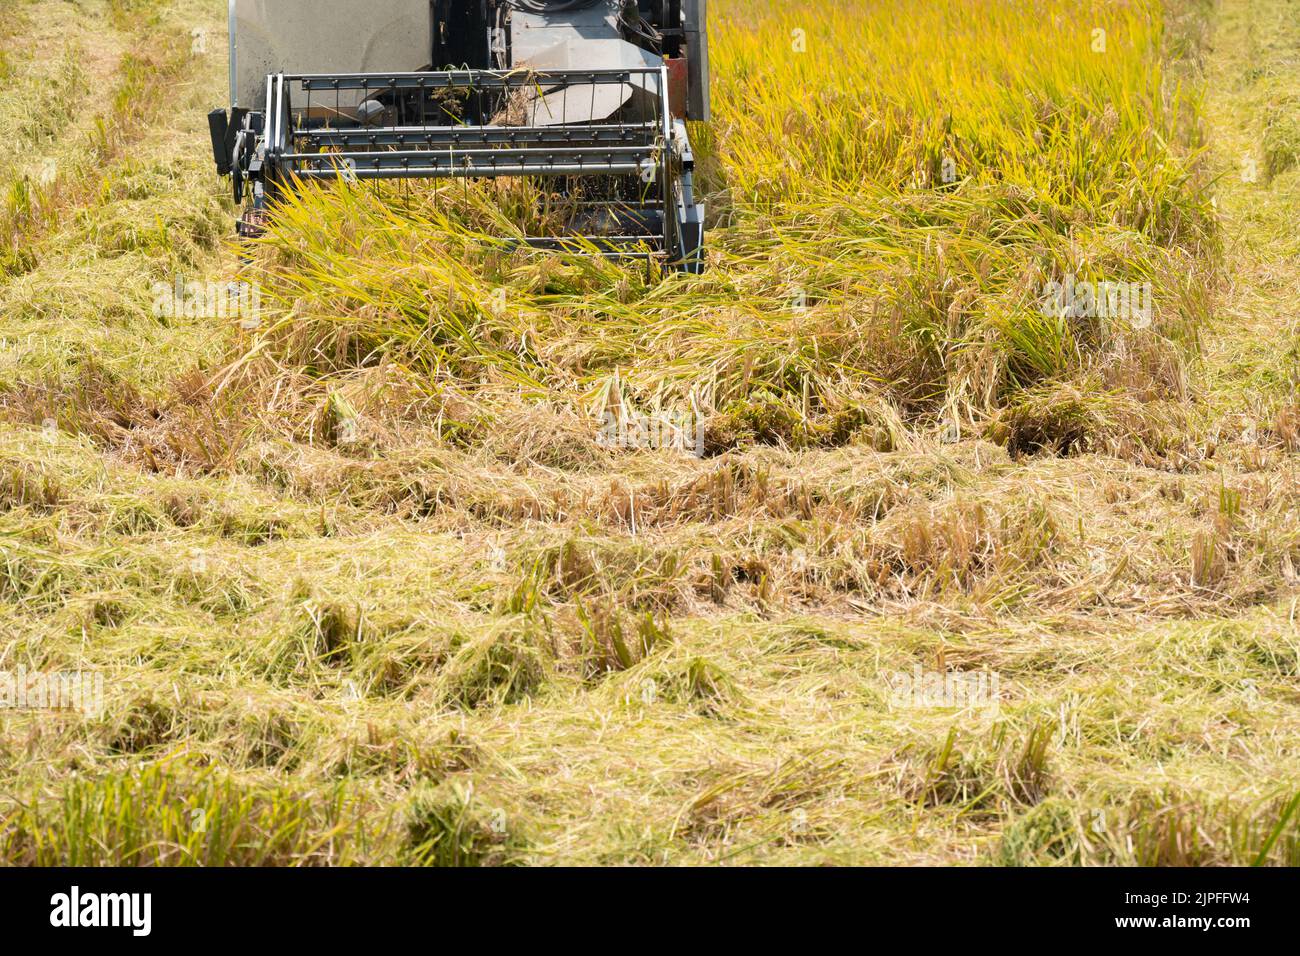 harvesting paddies by a harvester machine Stock Photo